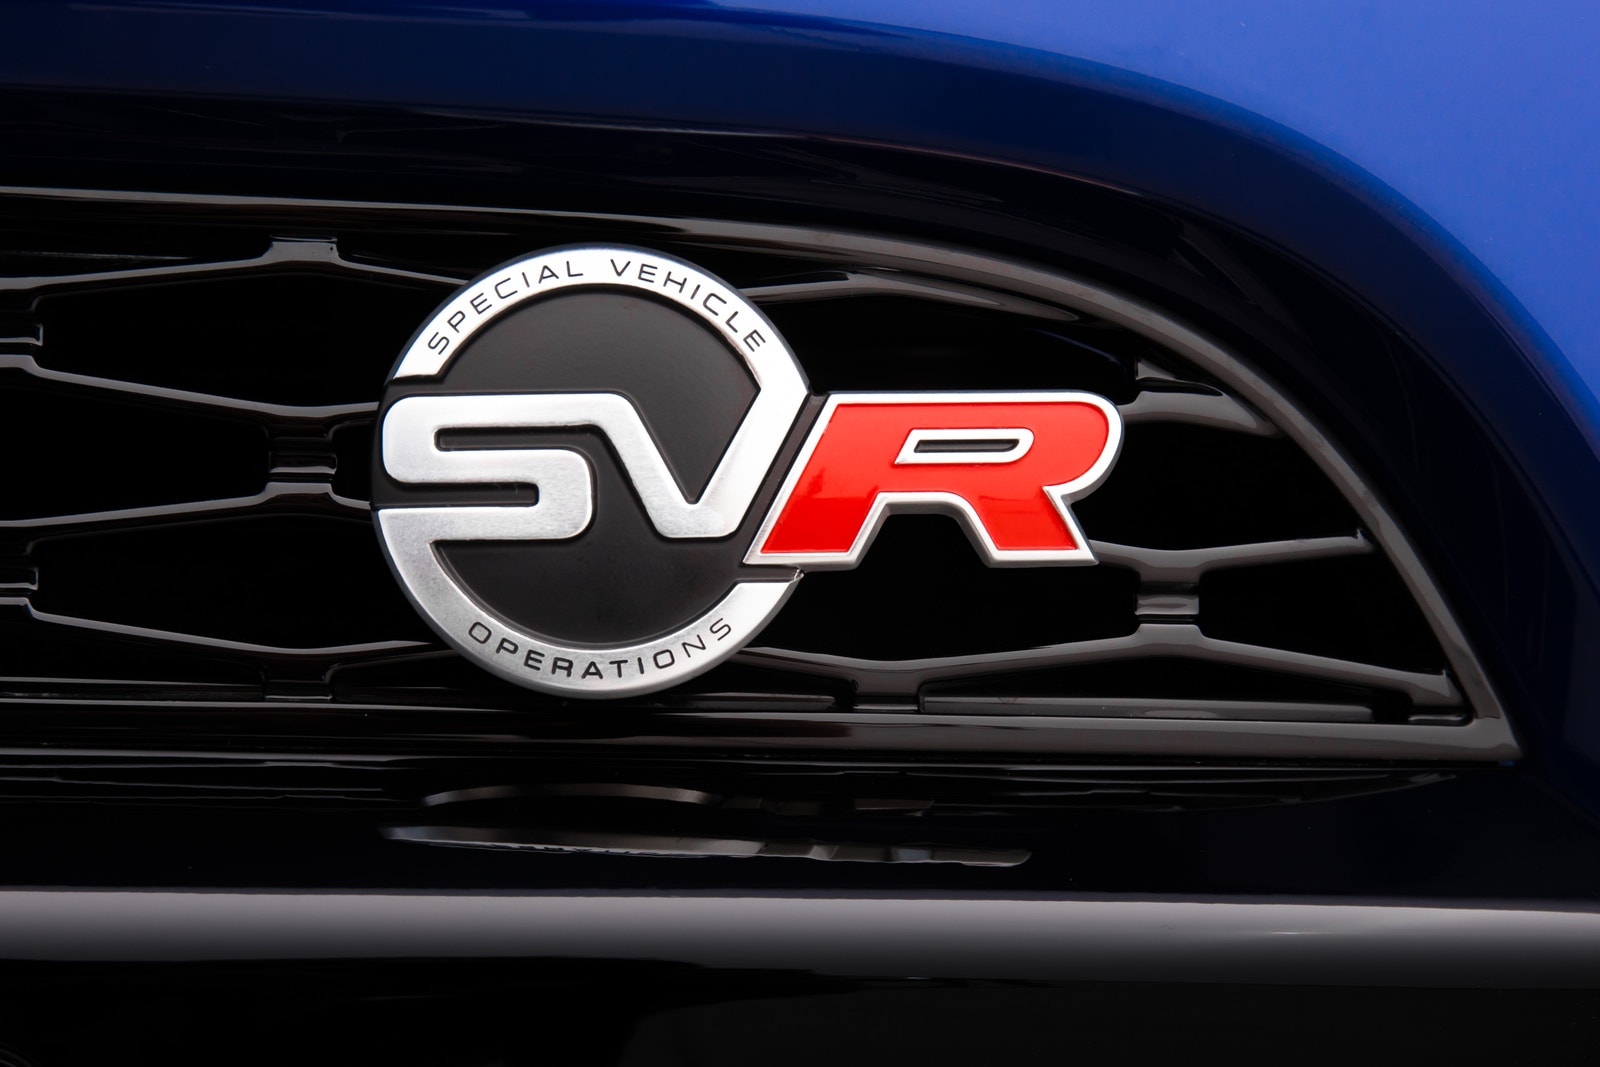 Range Rover Sport SVR exterior badge